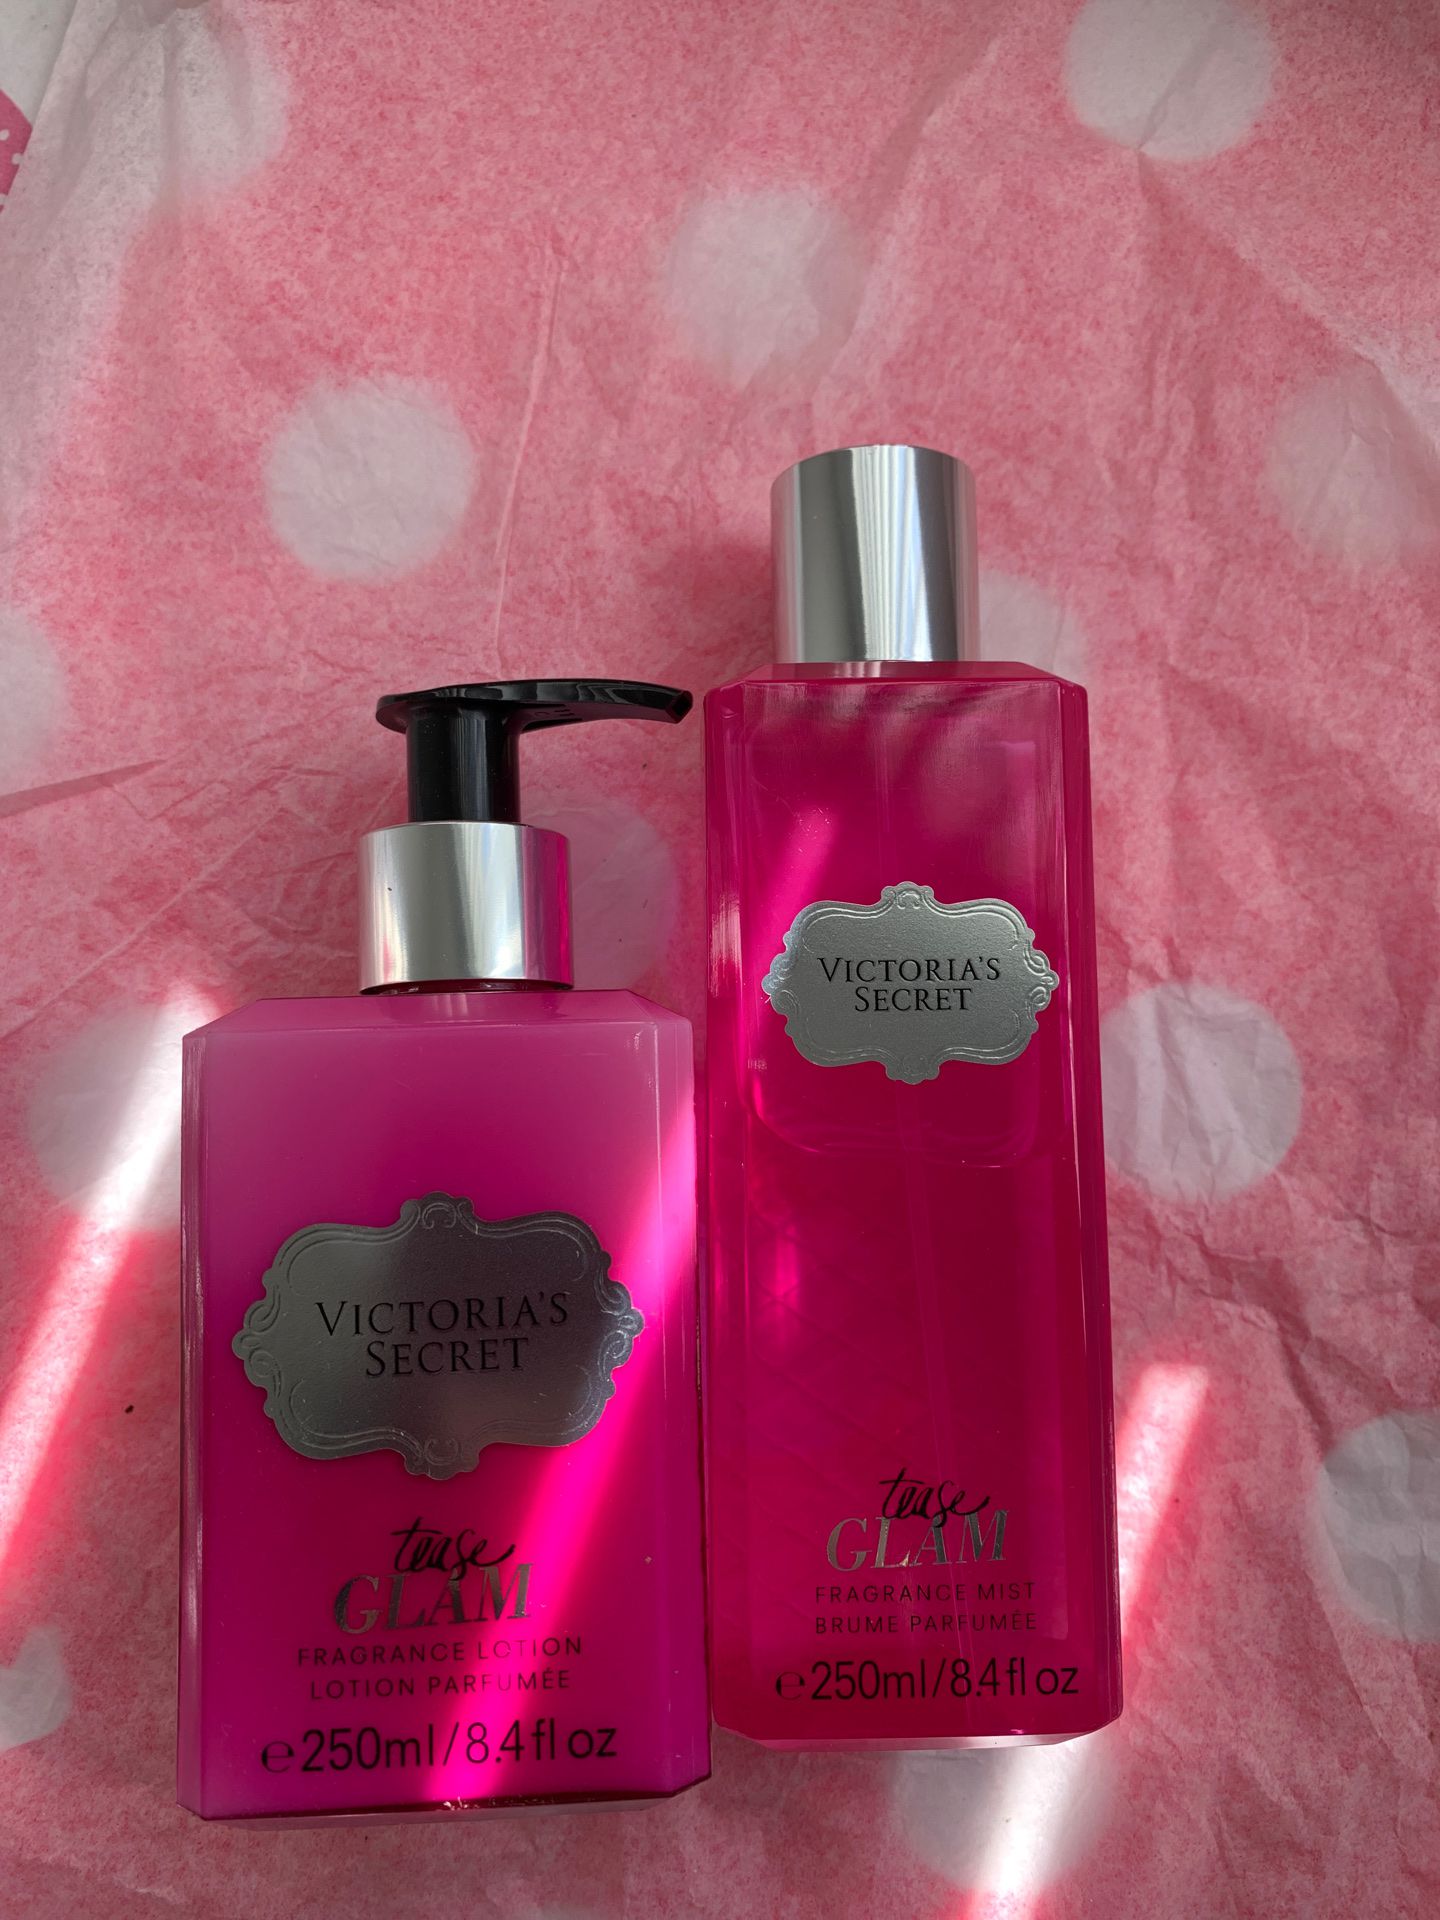 Victoria’s Secret tease glam fragrance mist and lotion set for $20